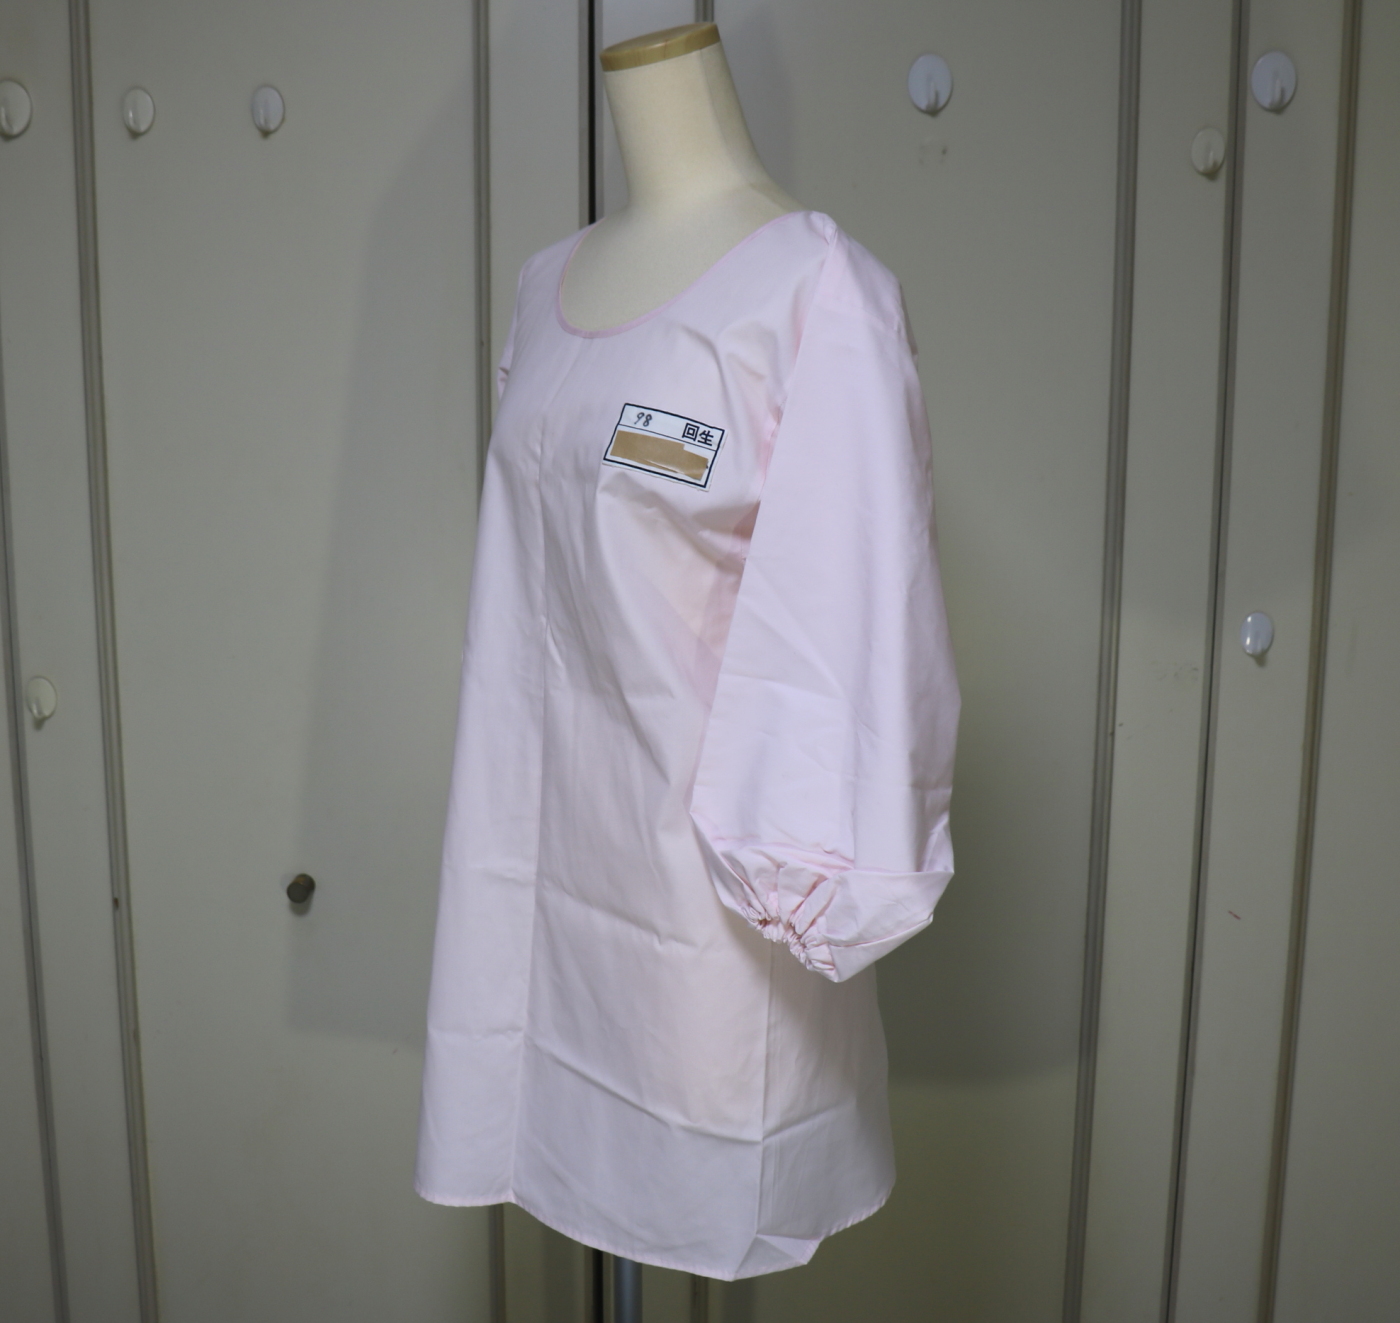 ｊｗｕ 日本女子大学附属豊明小学校 家庭科の授業で使用するダブリエ 割烹着 を買取させていただきました 制服買取東京